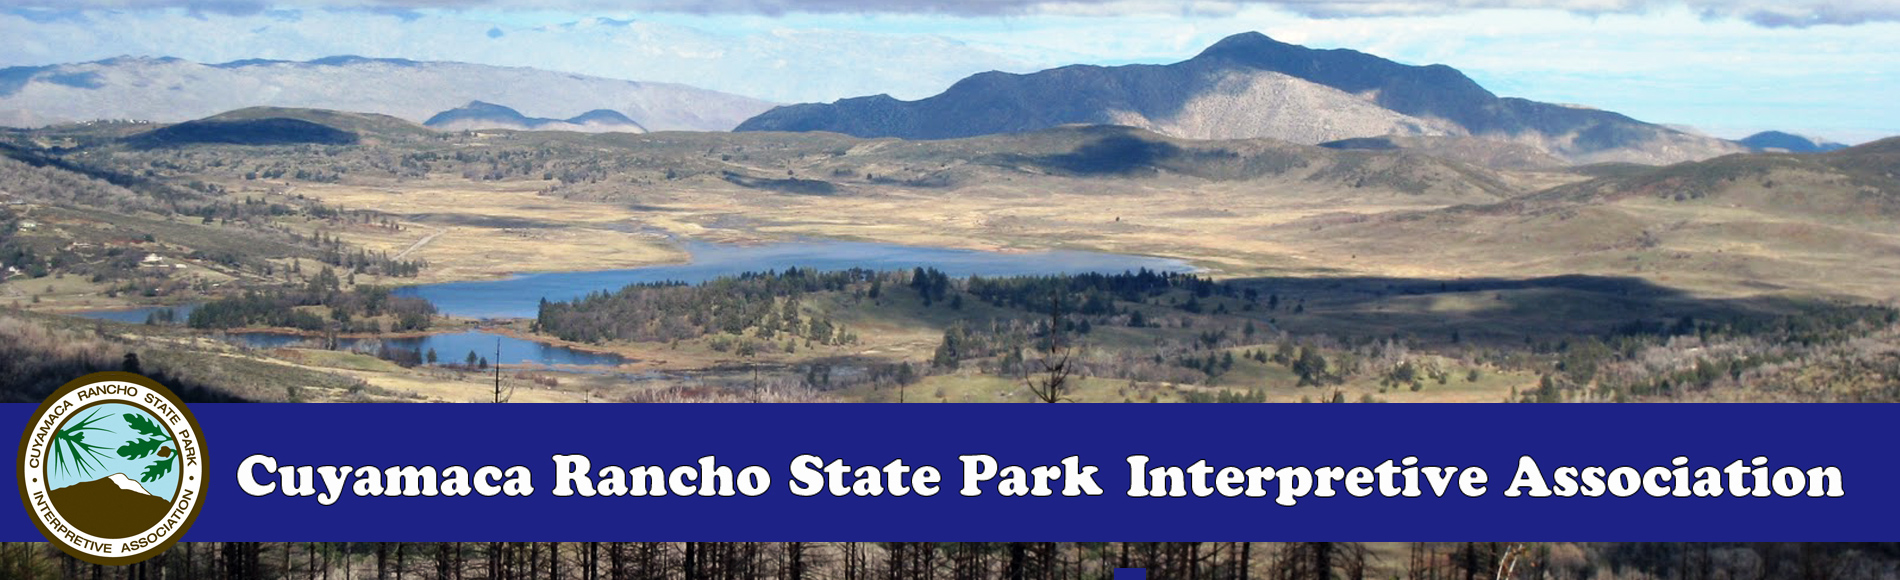 Cuyamaca Rancho State Park Interpretive Association